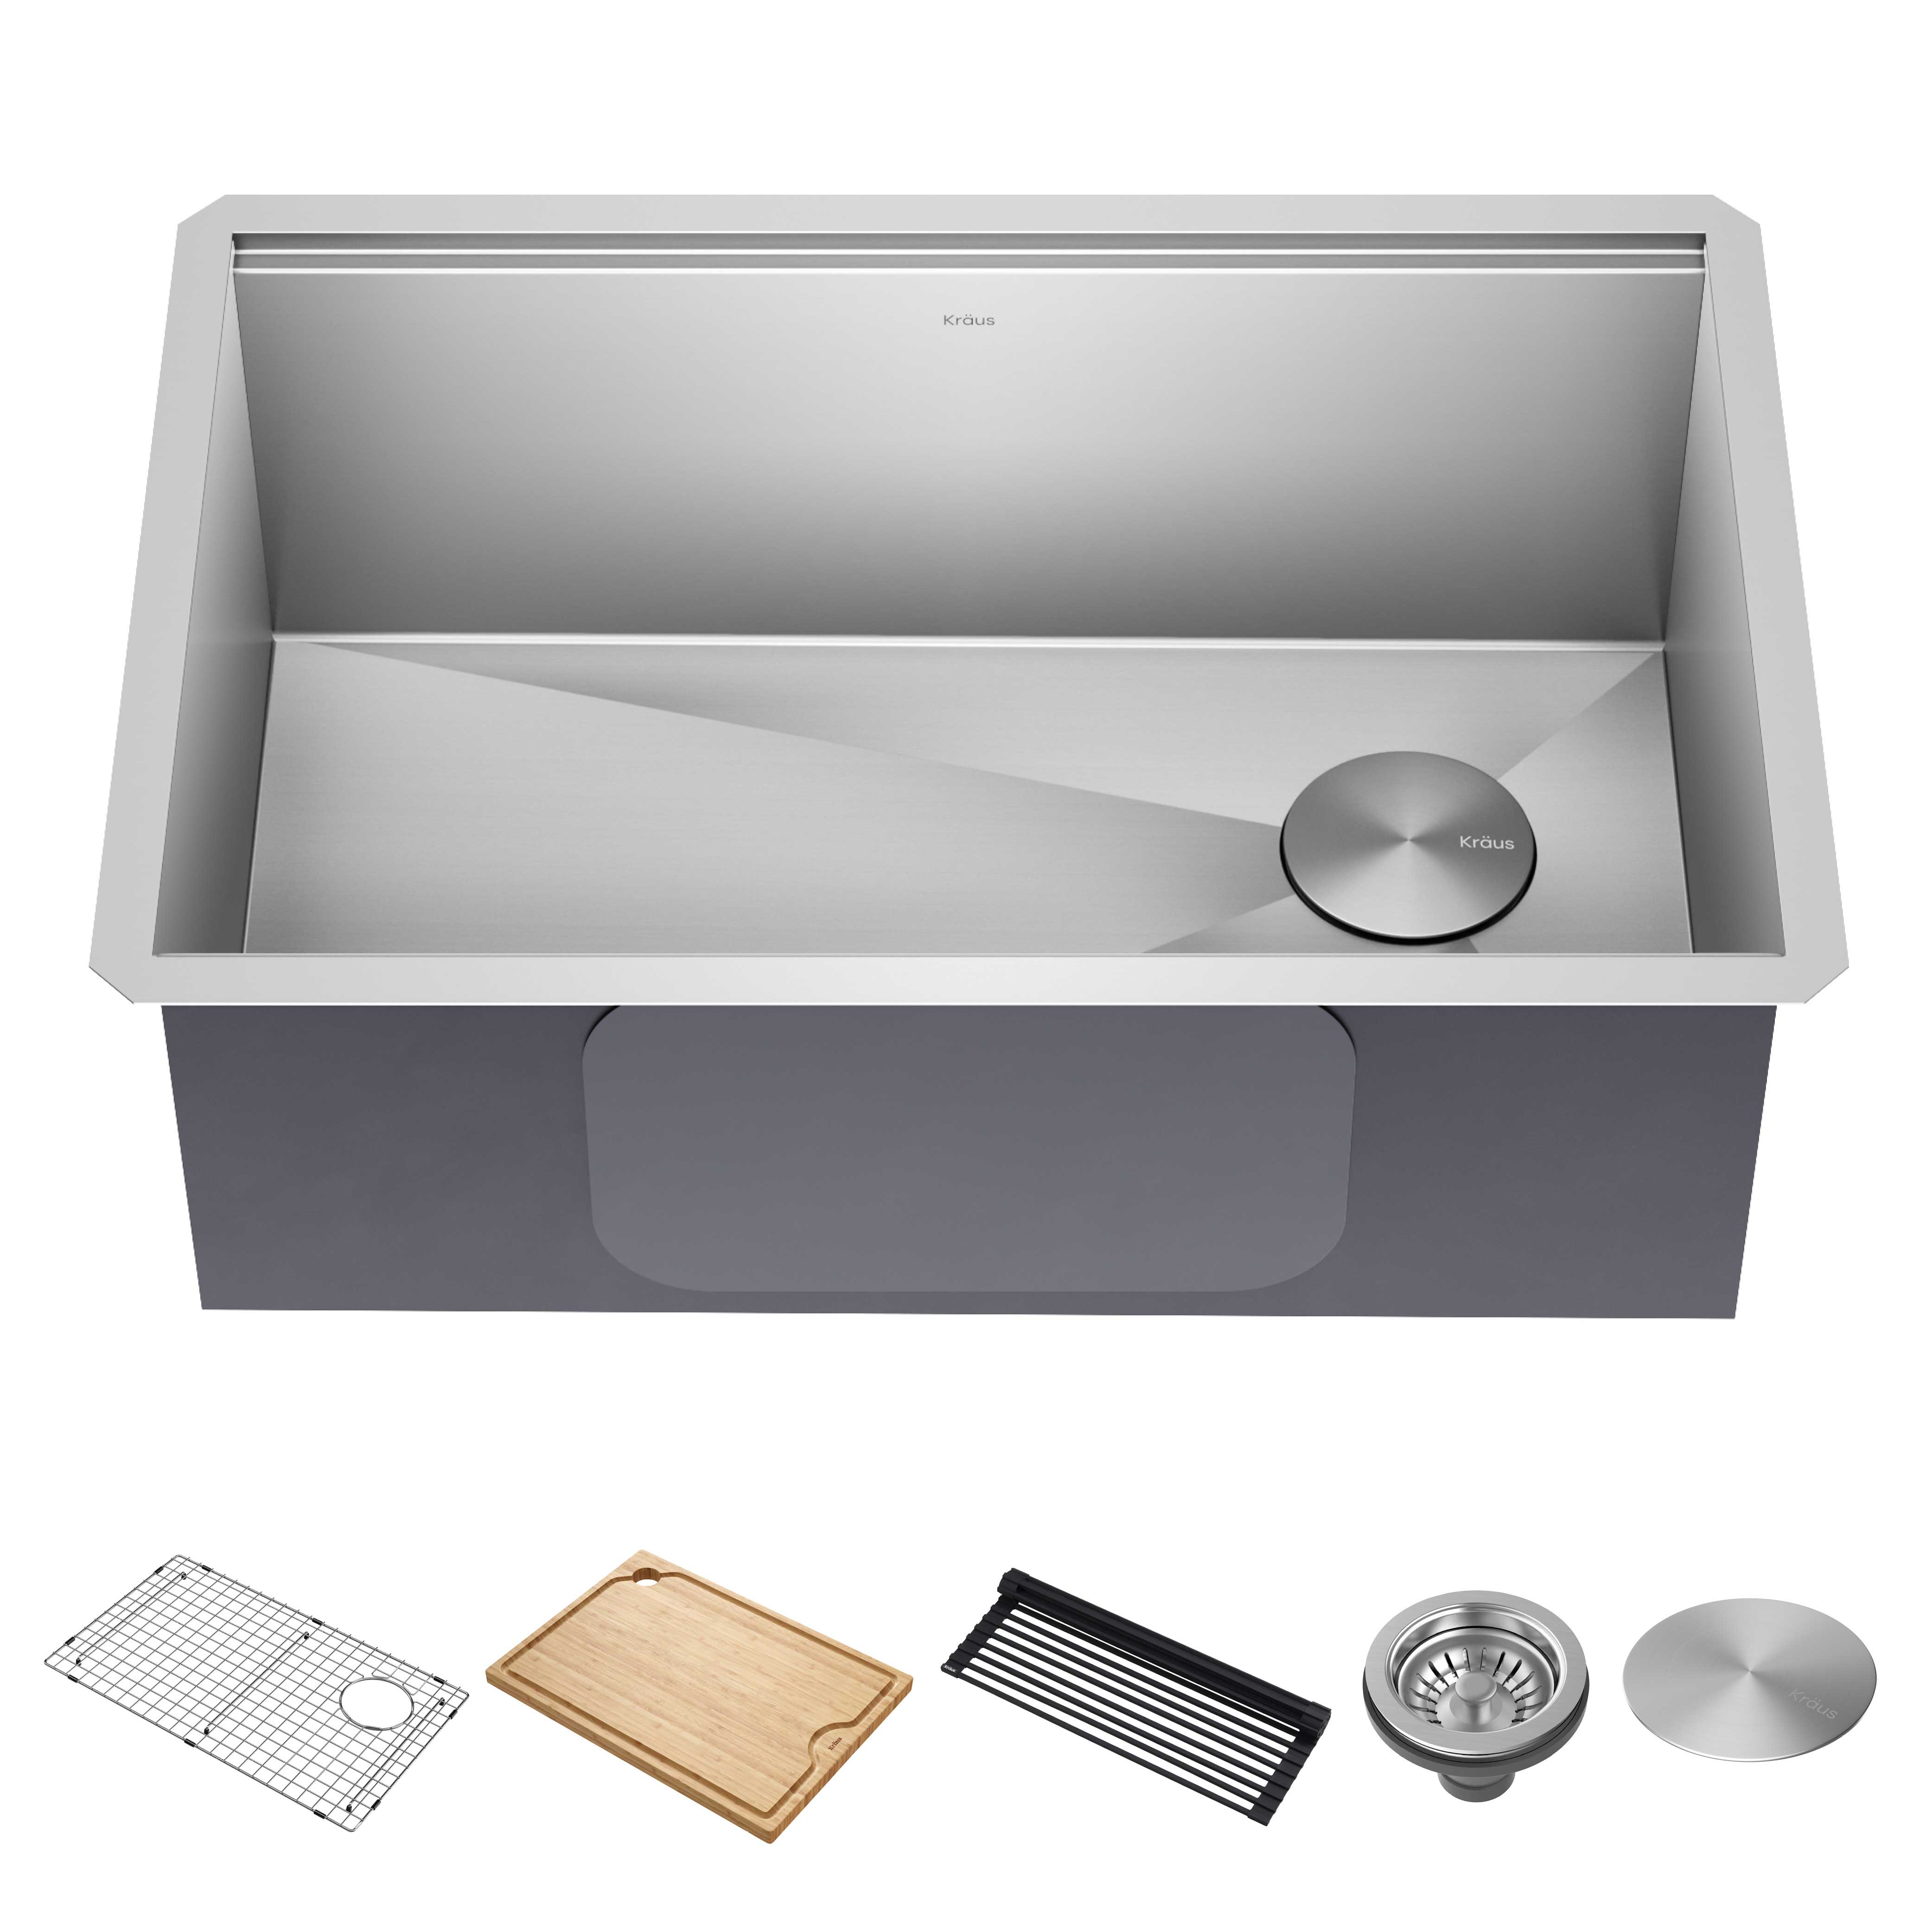 Kraus Kore 28Undermount Workstation 16 Gauge Stainless Steel Single Bowl Kitchen Sink with Accessories - image 1 of 16